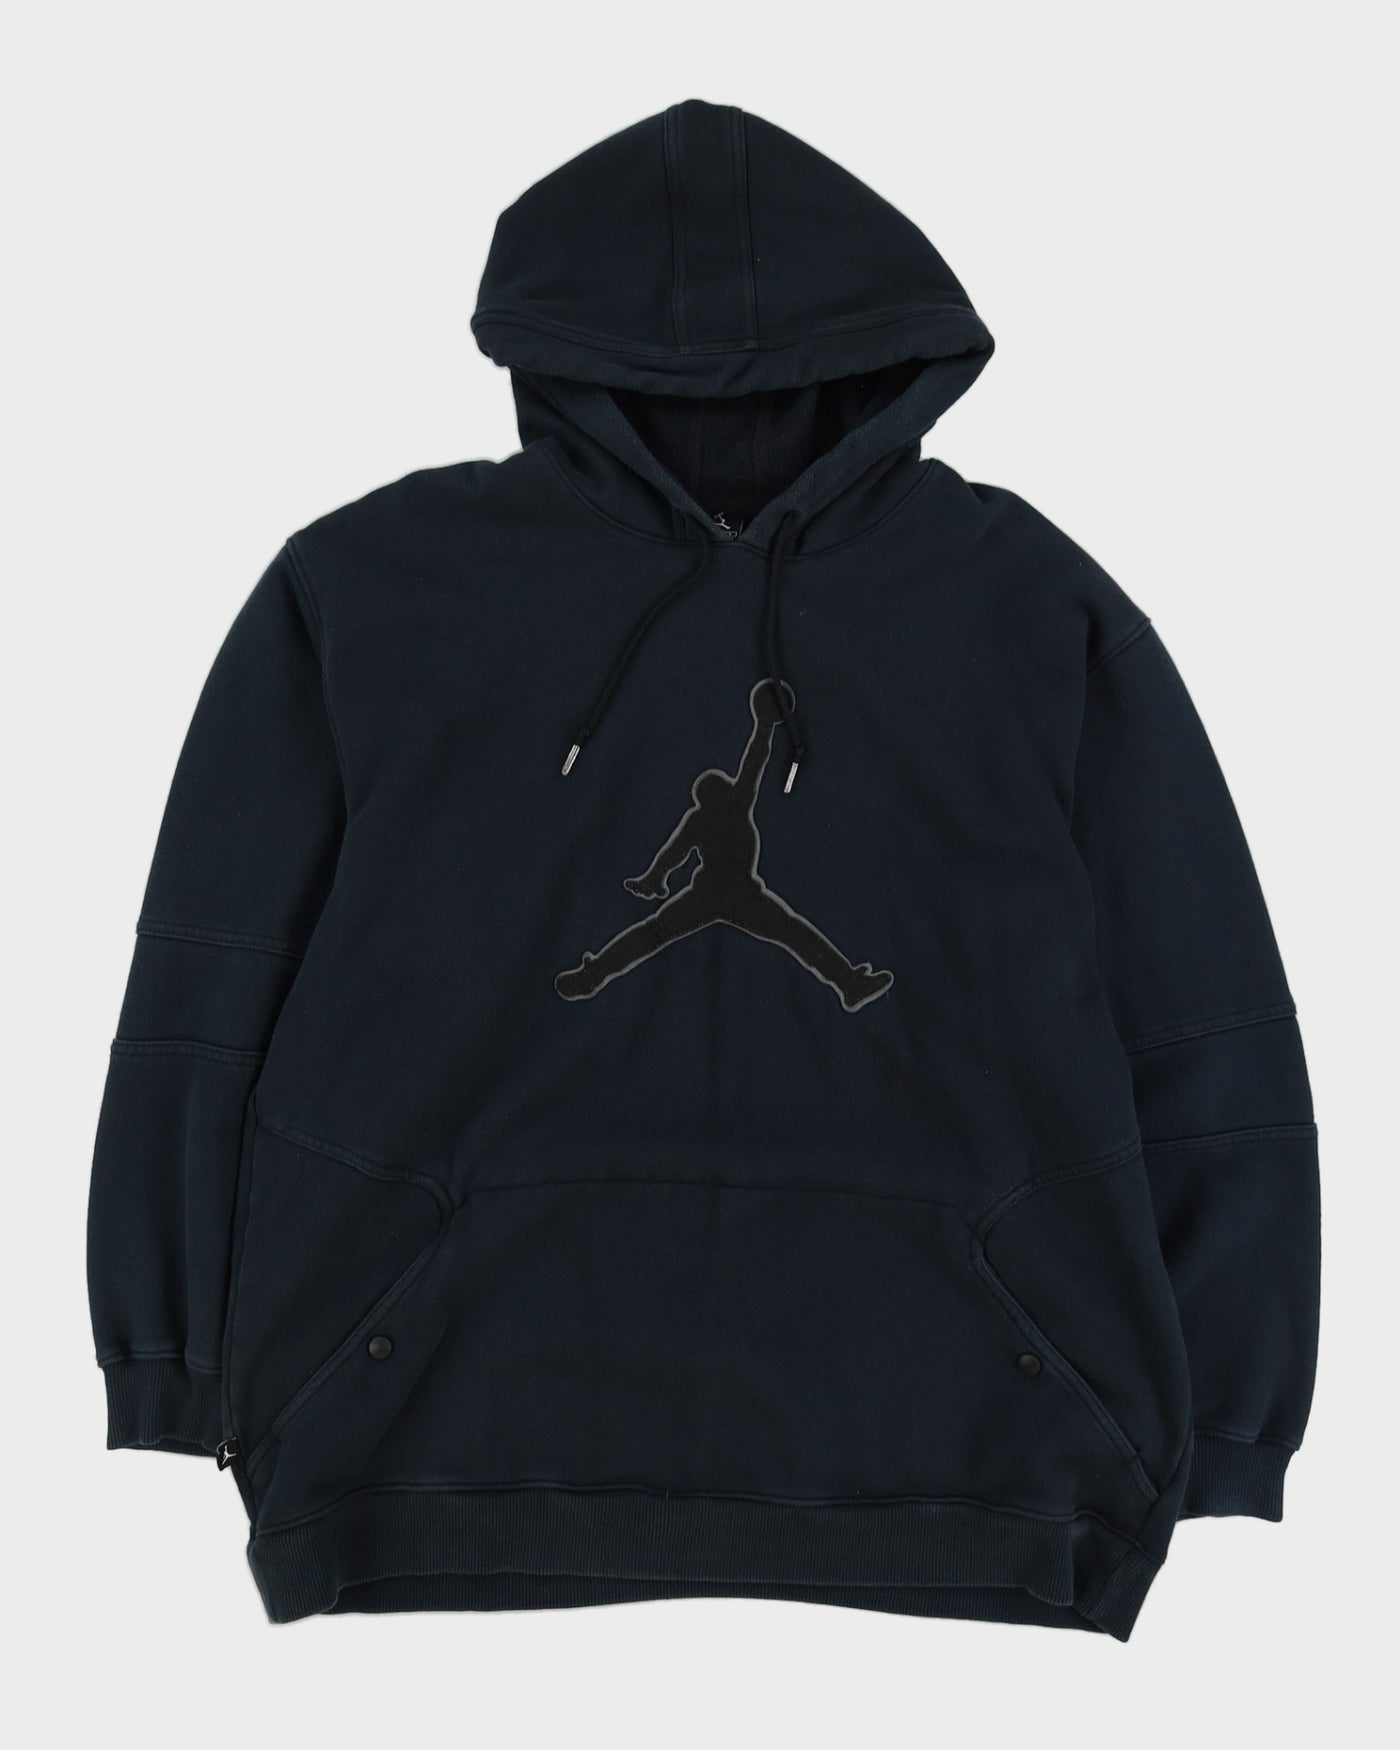 00s Jordan Black Hoodie With Embroidery Logo - XL